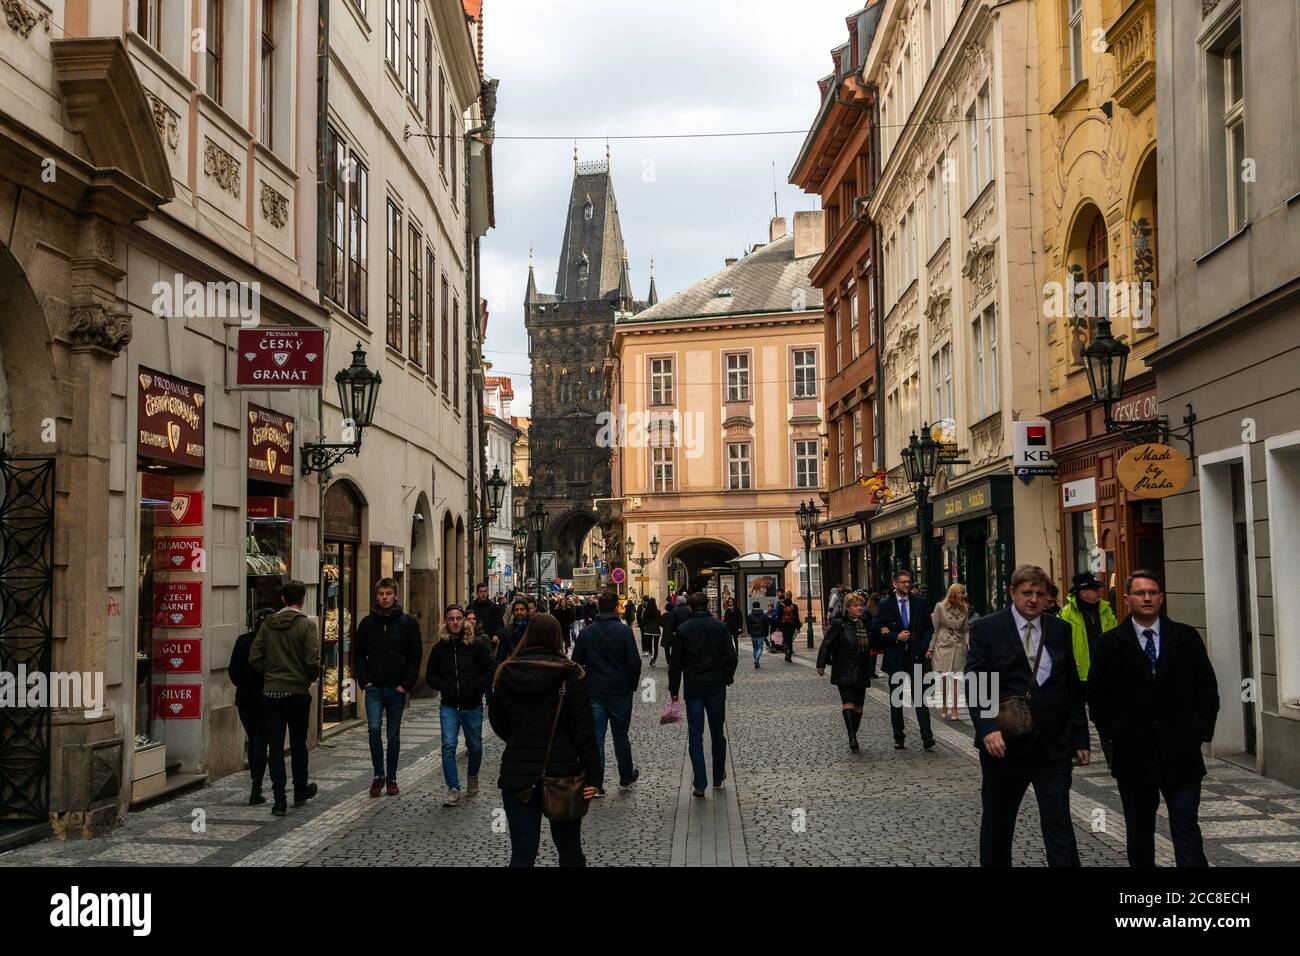 Prague, Czech Republic - 04 15 2019: The medieval streets of Prague Old Town, Czech Republic Stock Photo